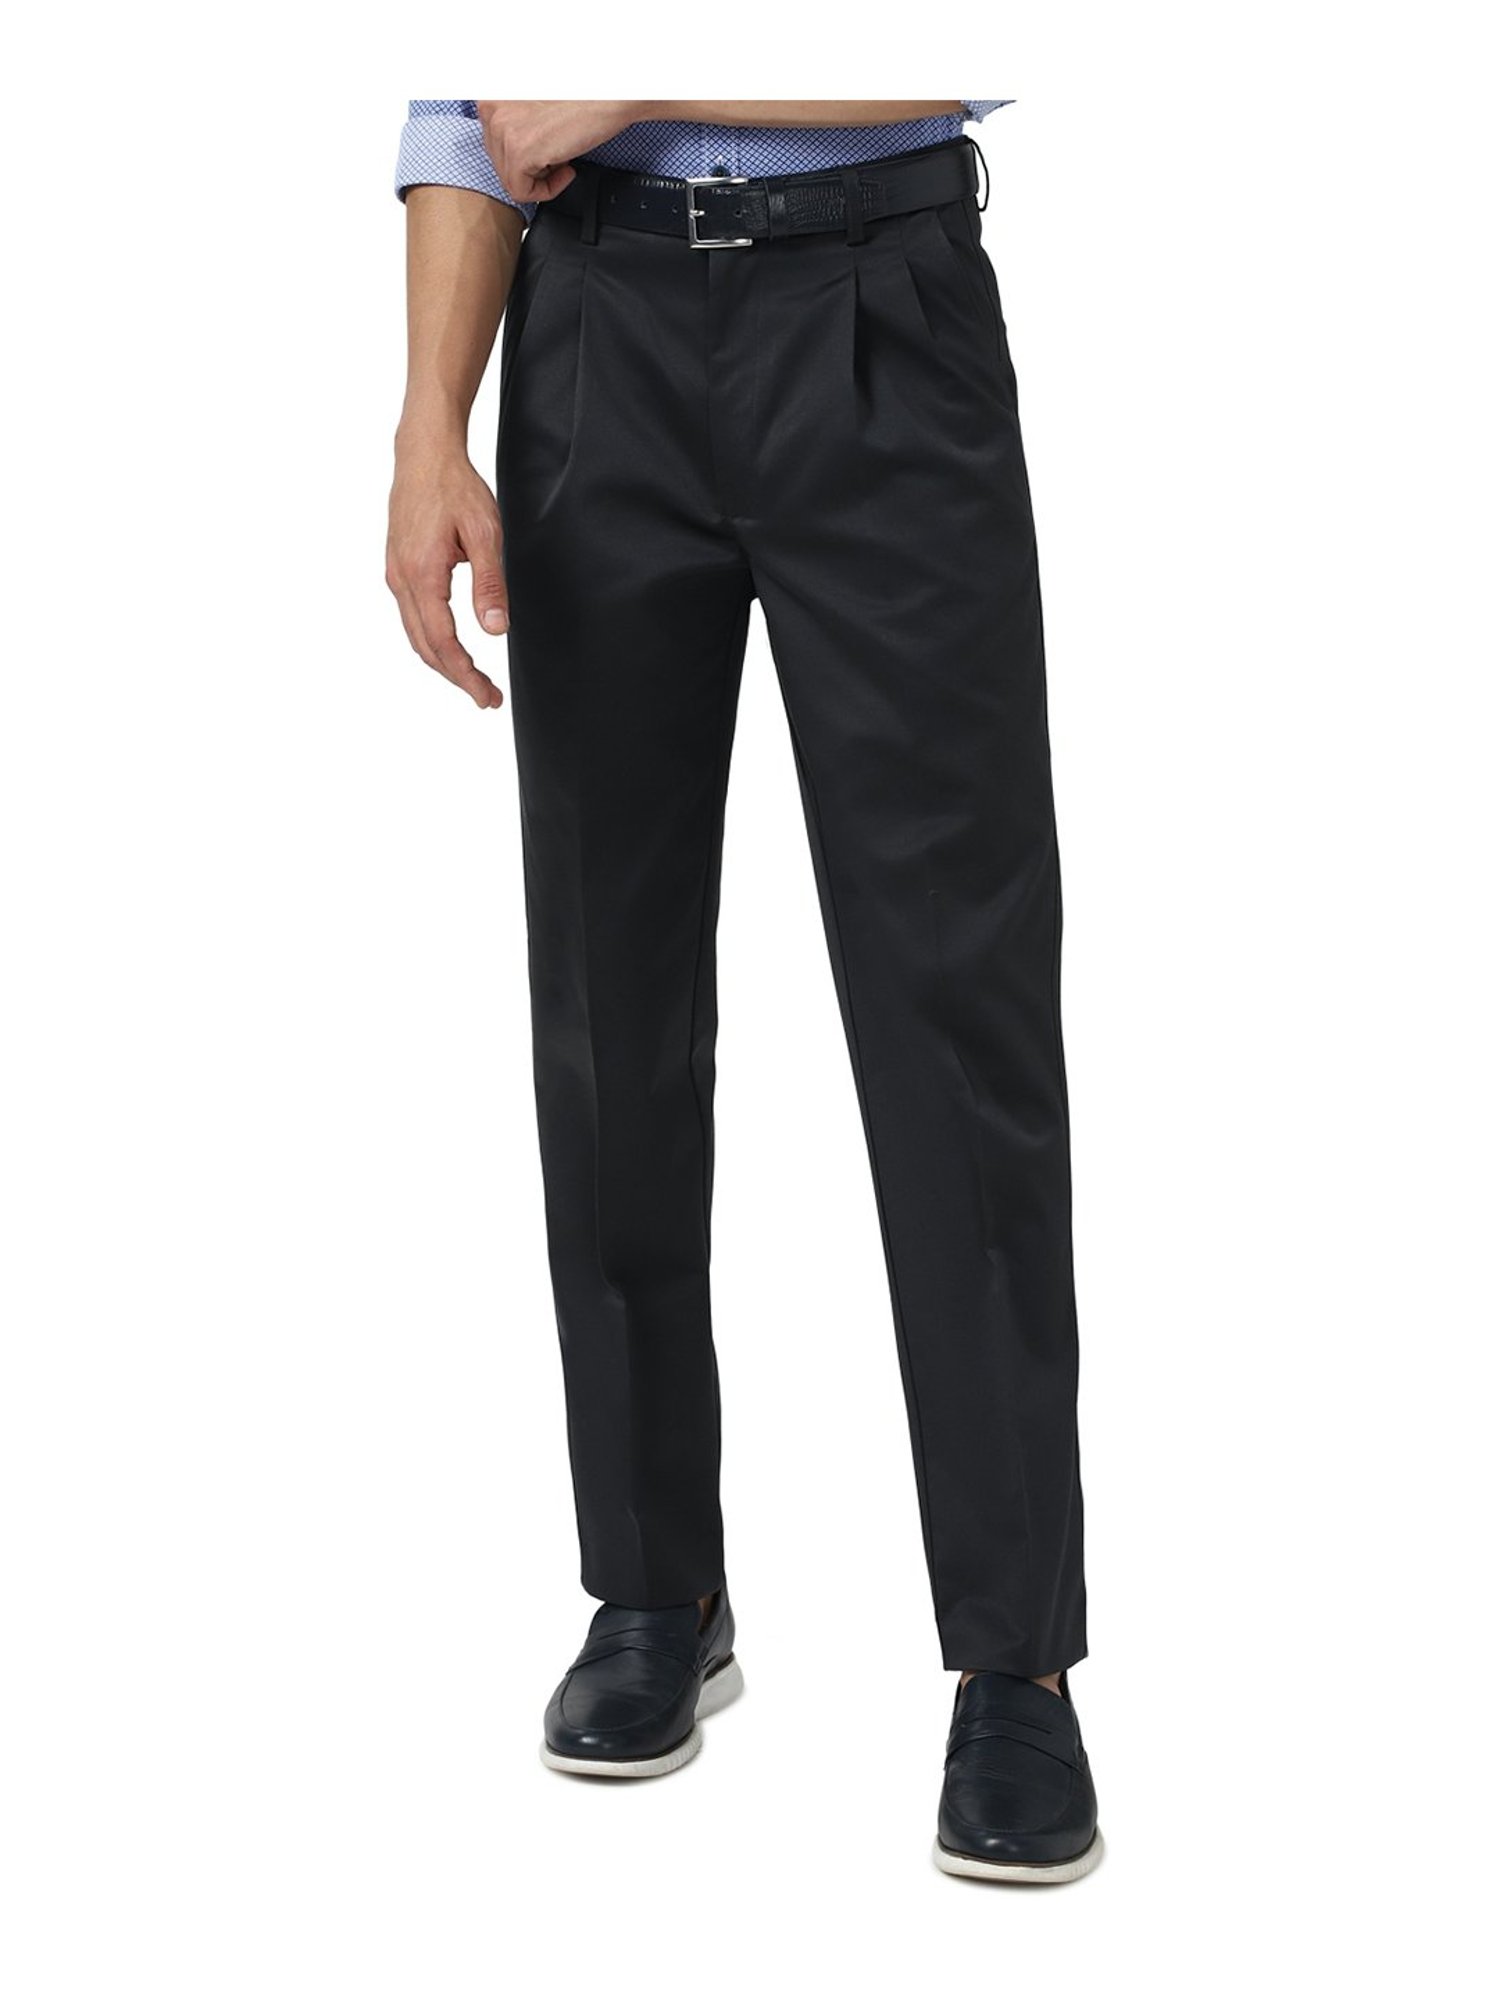 Buy Peter England Casuals Men Navy Casual Trousers online